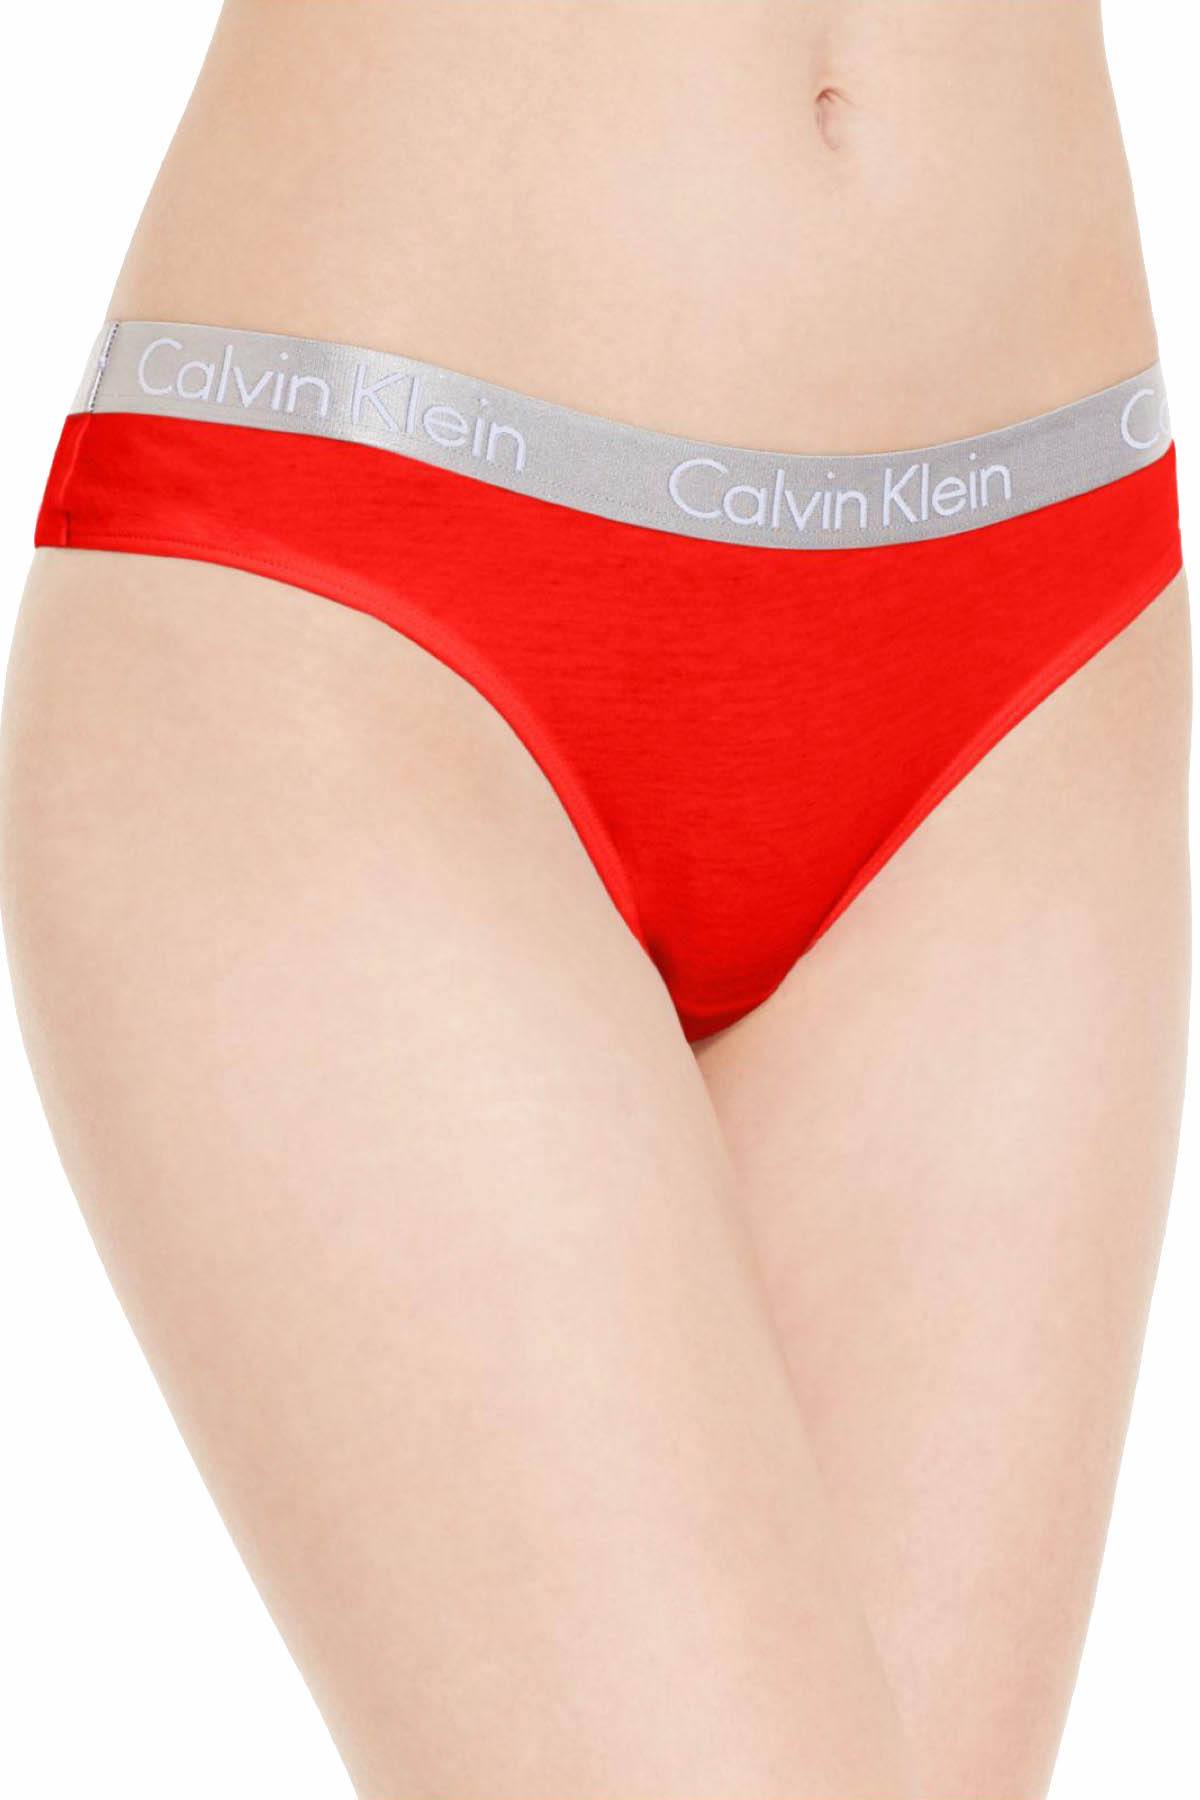 Calvin Klein Scandal-Red Radiant Cotton Thong